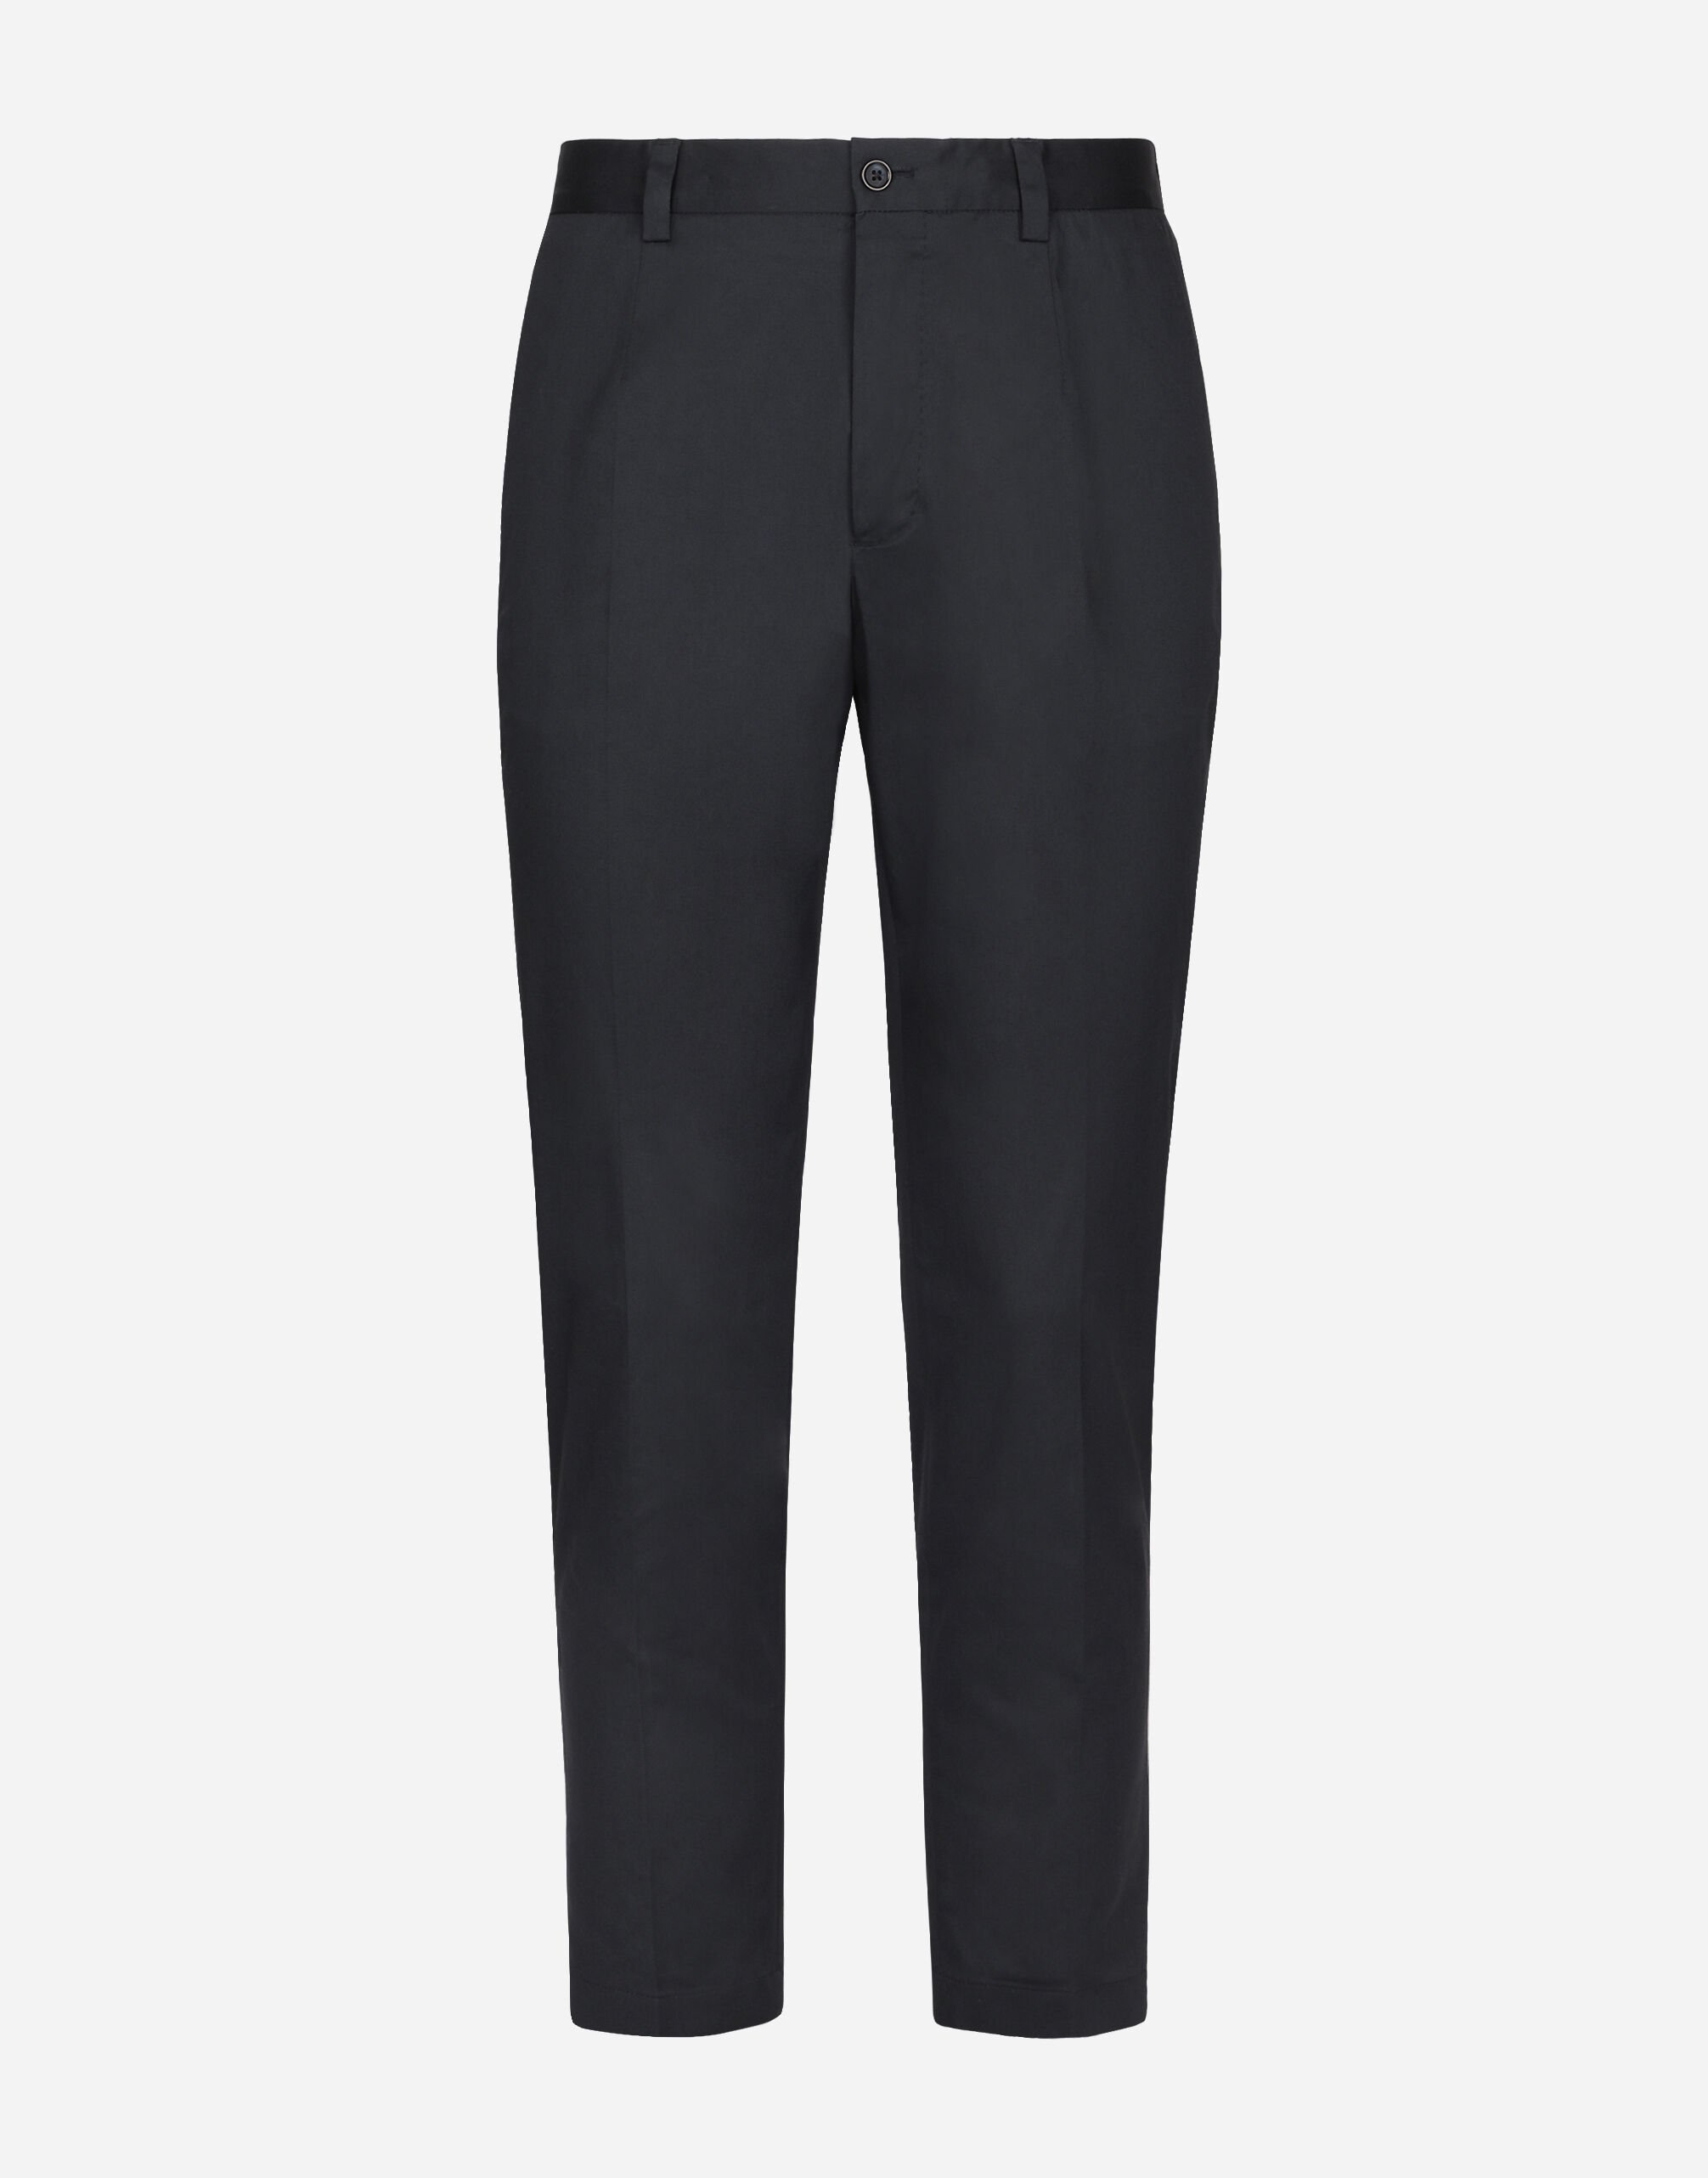 Dolce&Gabbana Stretch cotton pants Black G8PL4TG7F2H